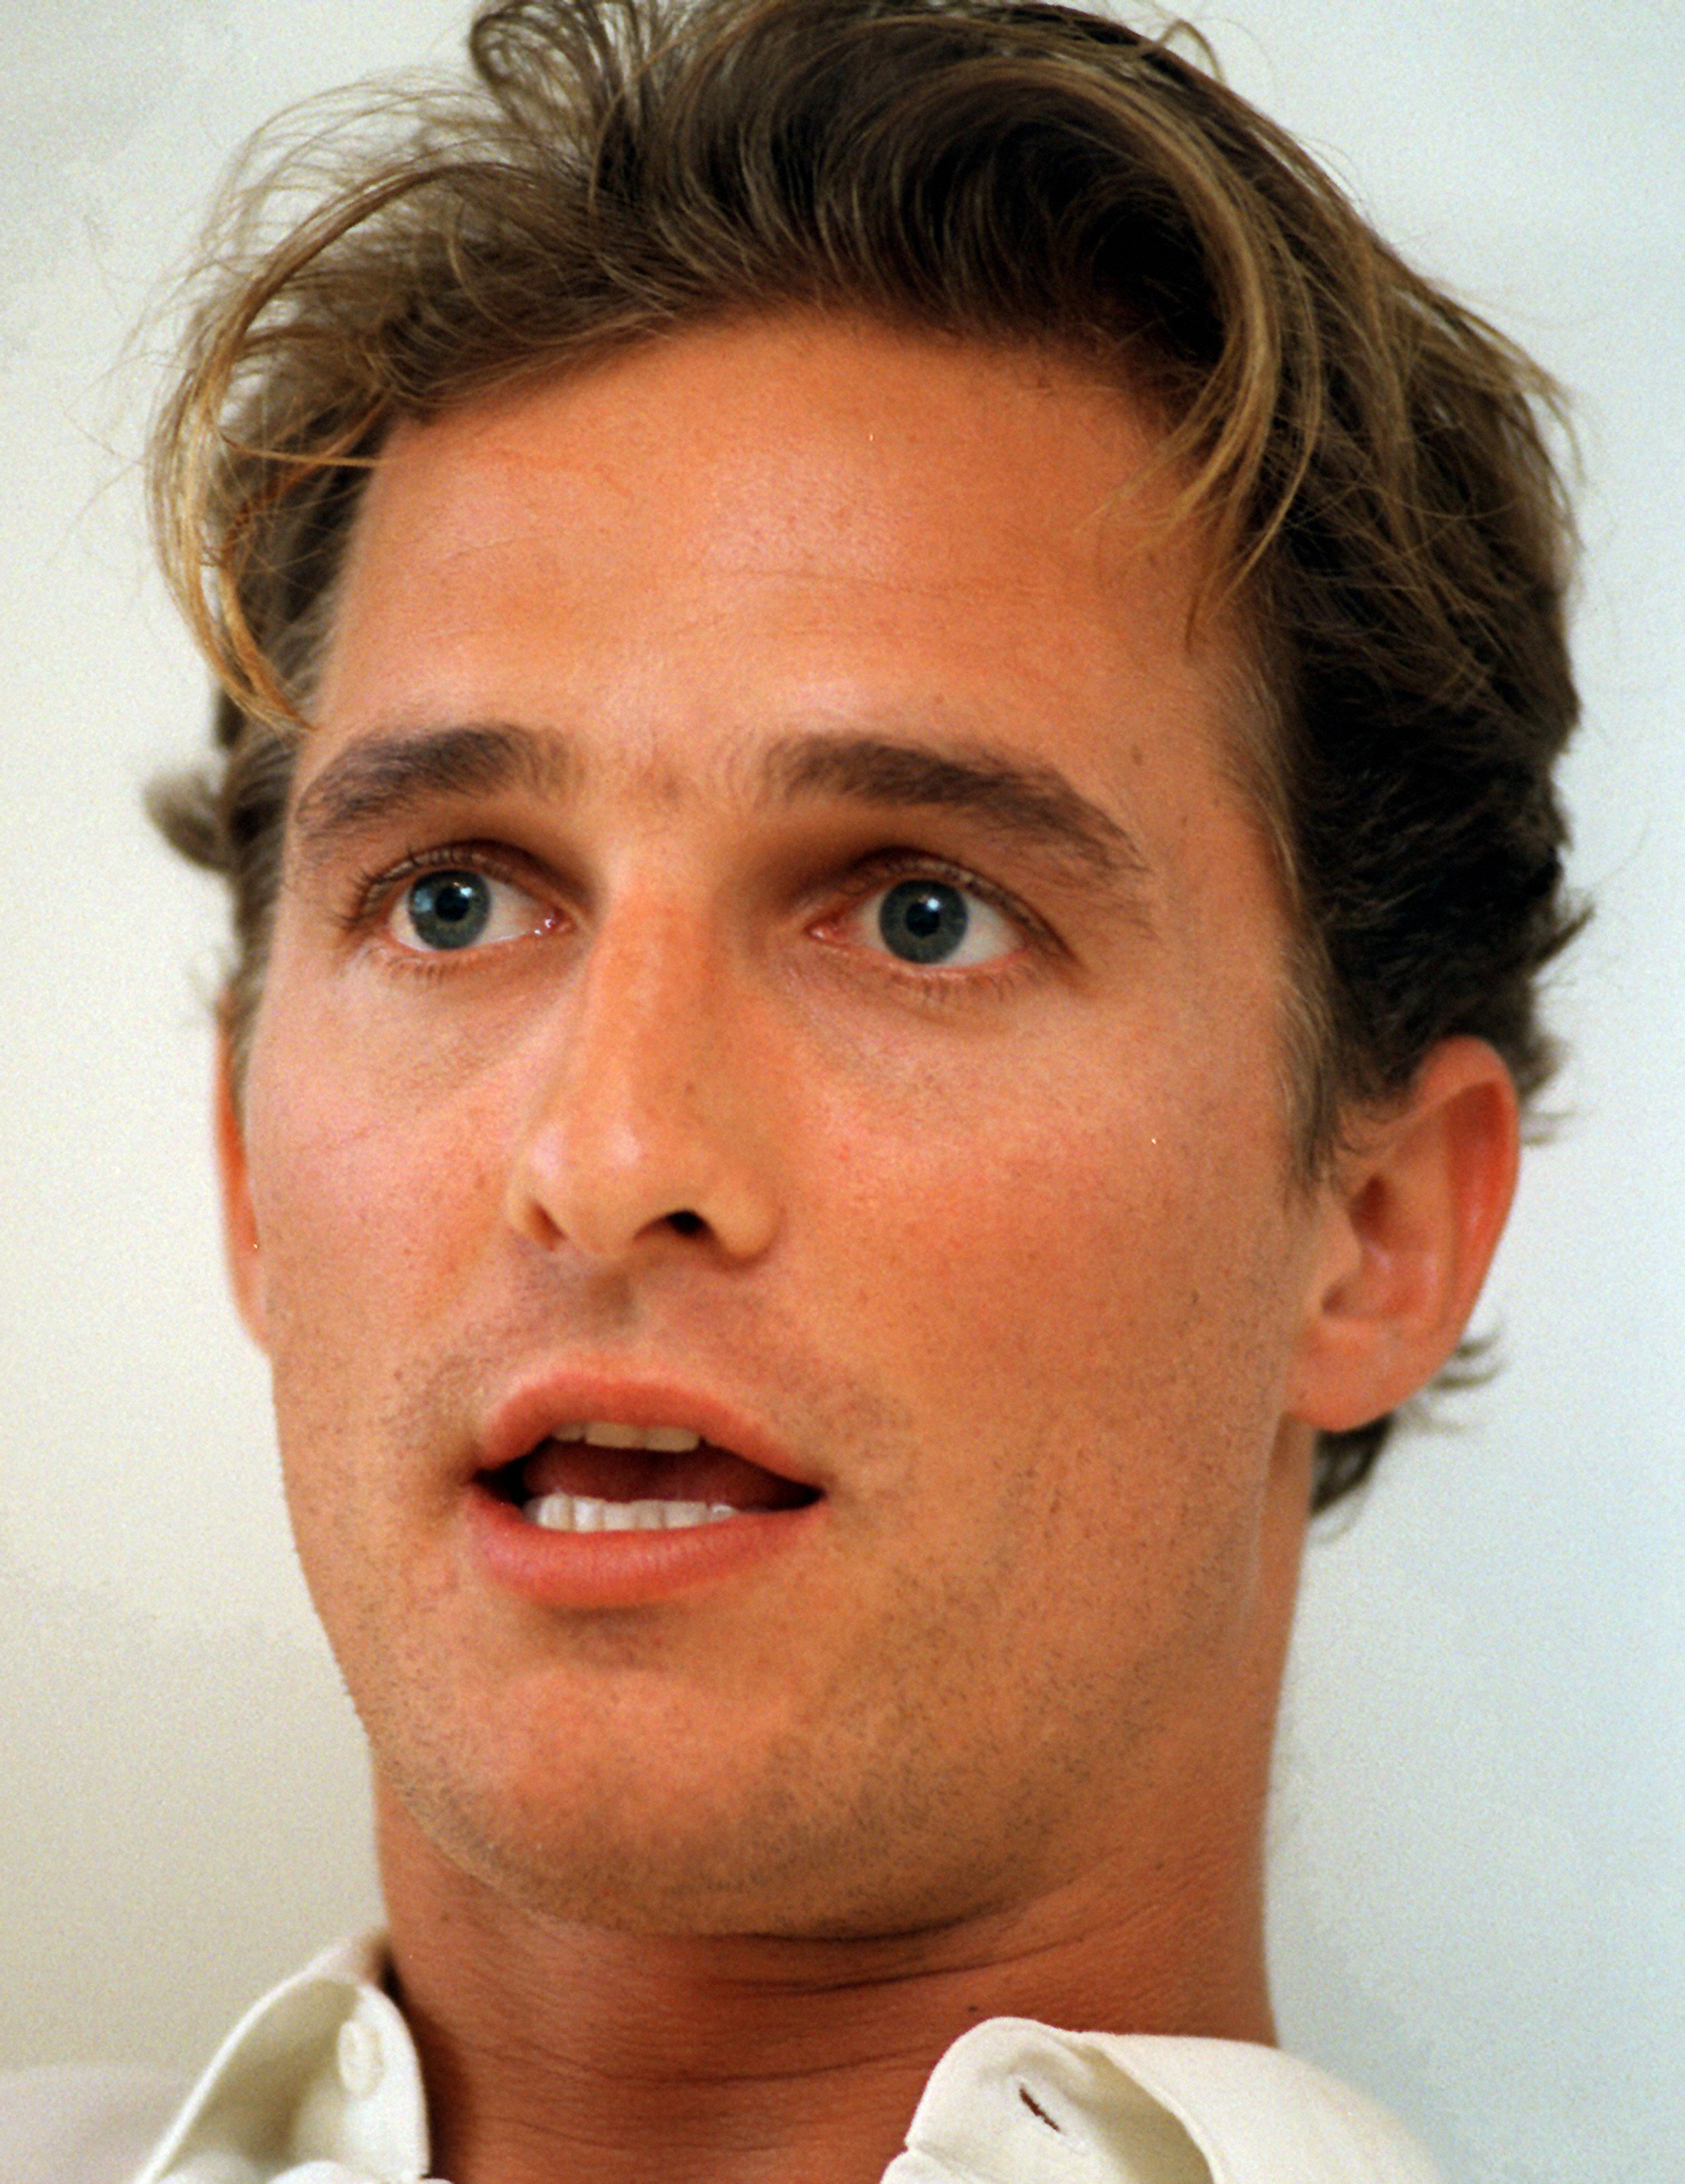 Matthew McConaughey speaking in Tokyo, Japan in 1997 | Source: Getty Images